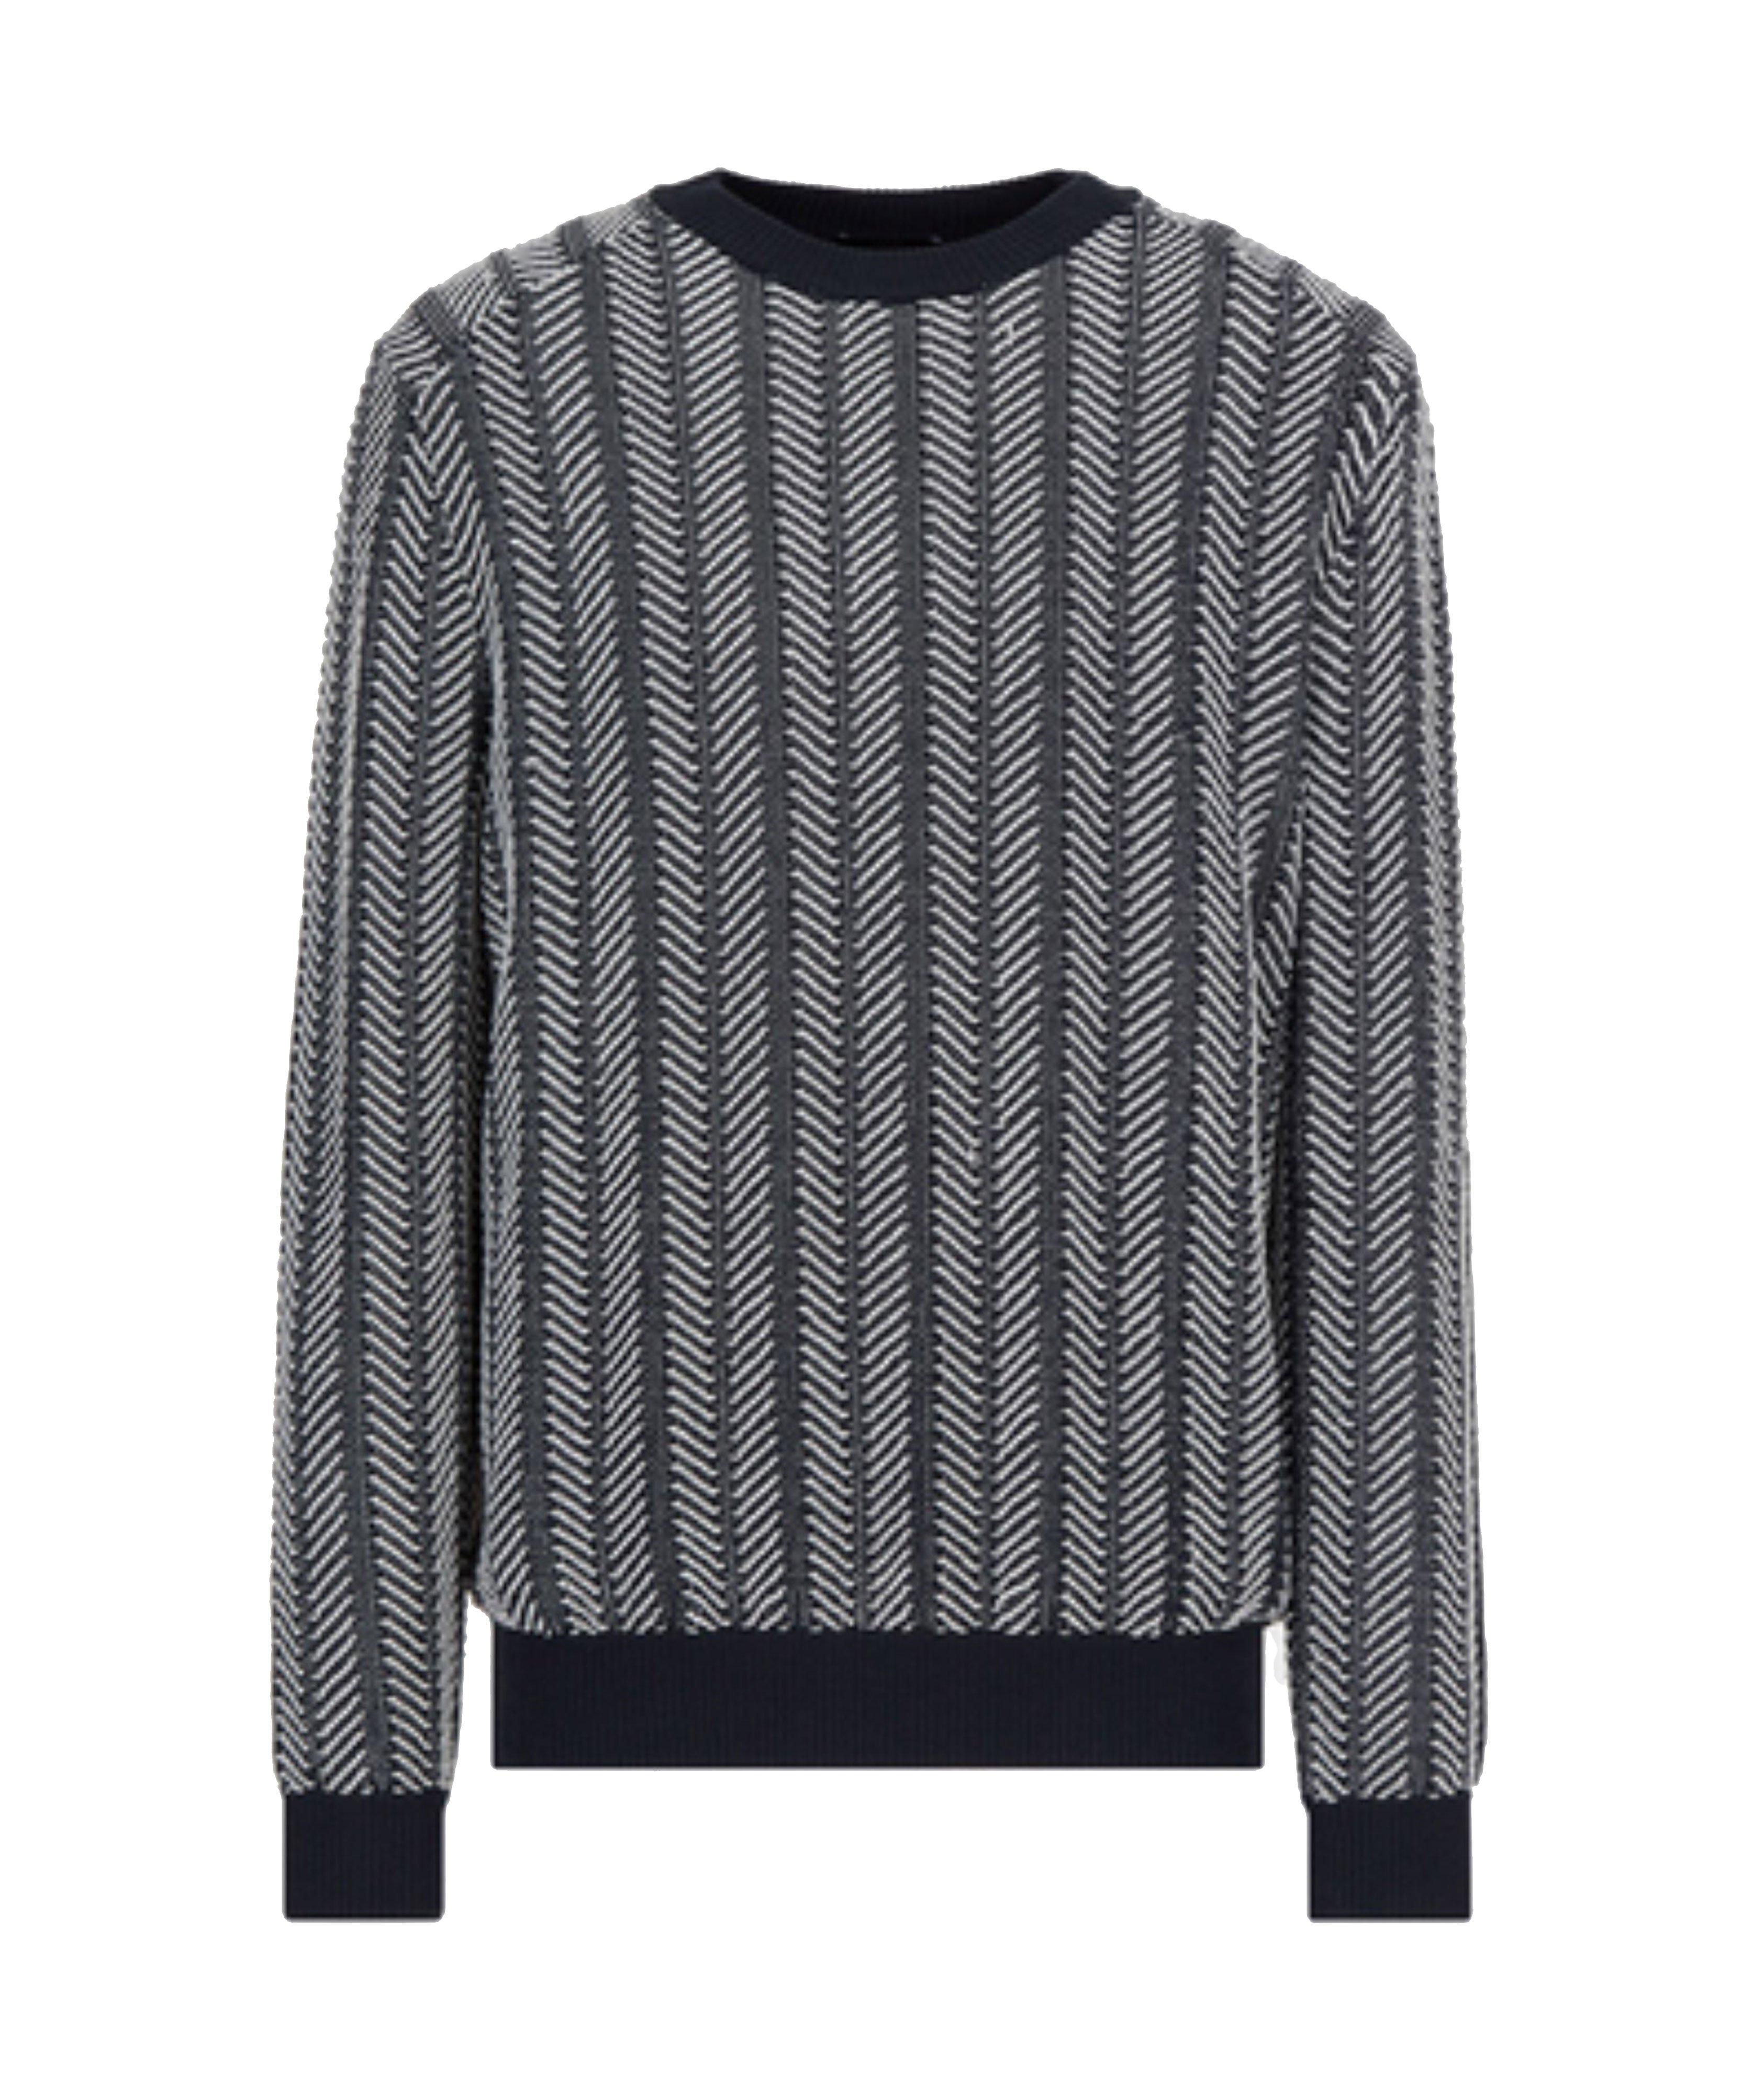 Jacquard Chevron Cotton Sweater image 0